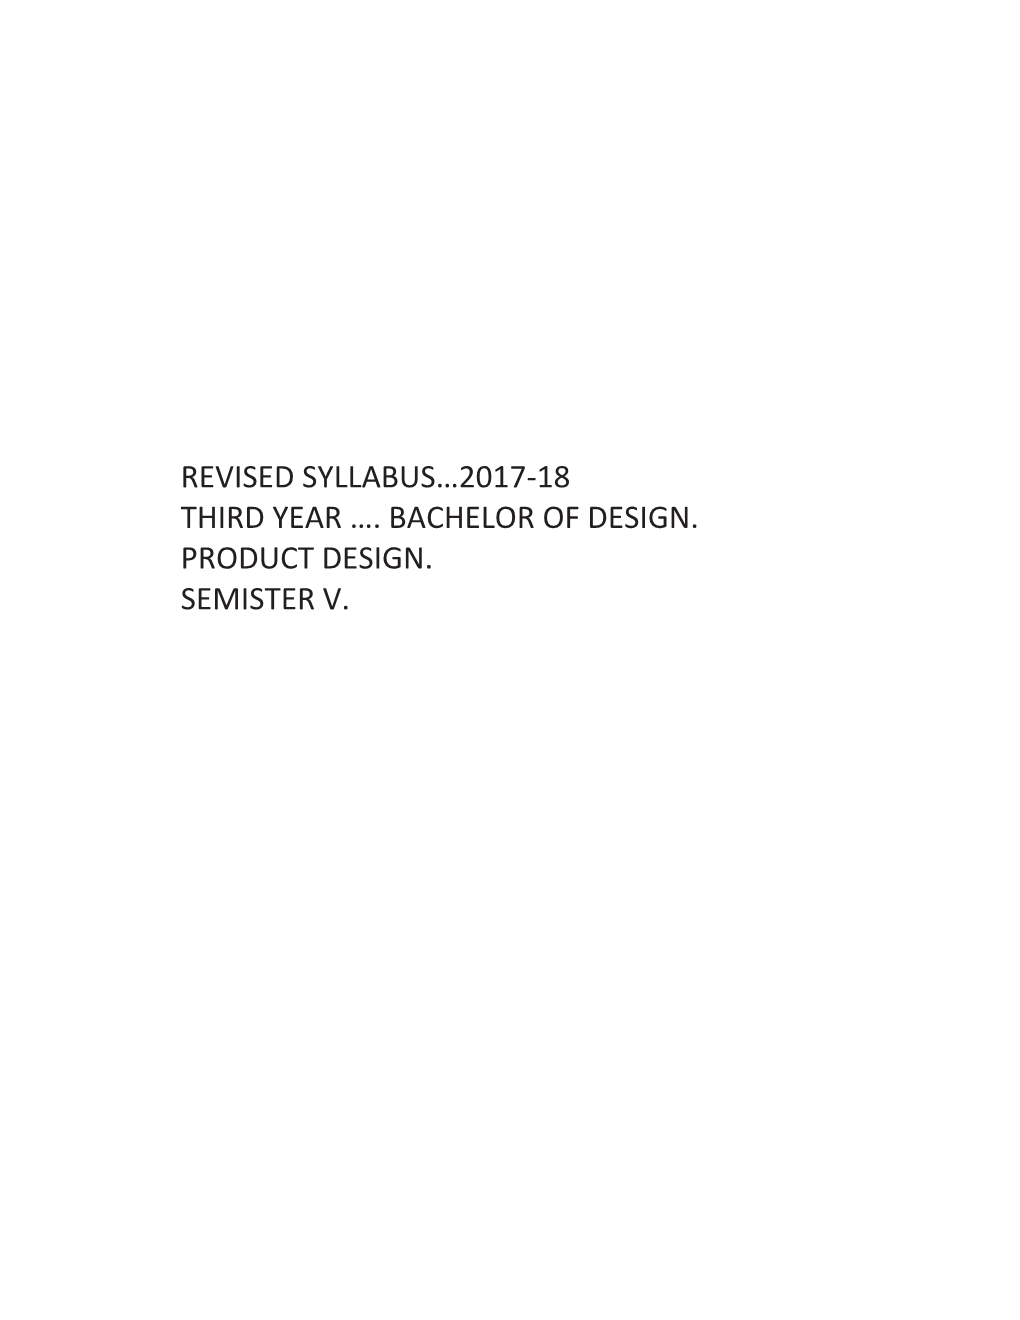 Revised Syllabus…2017-18 Third Year …. Bachelor of Design